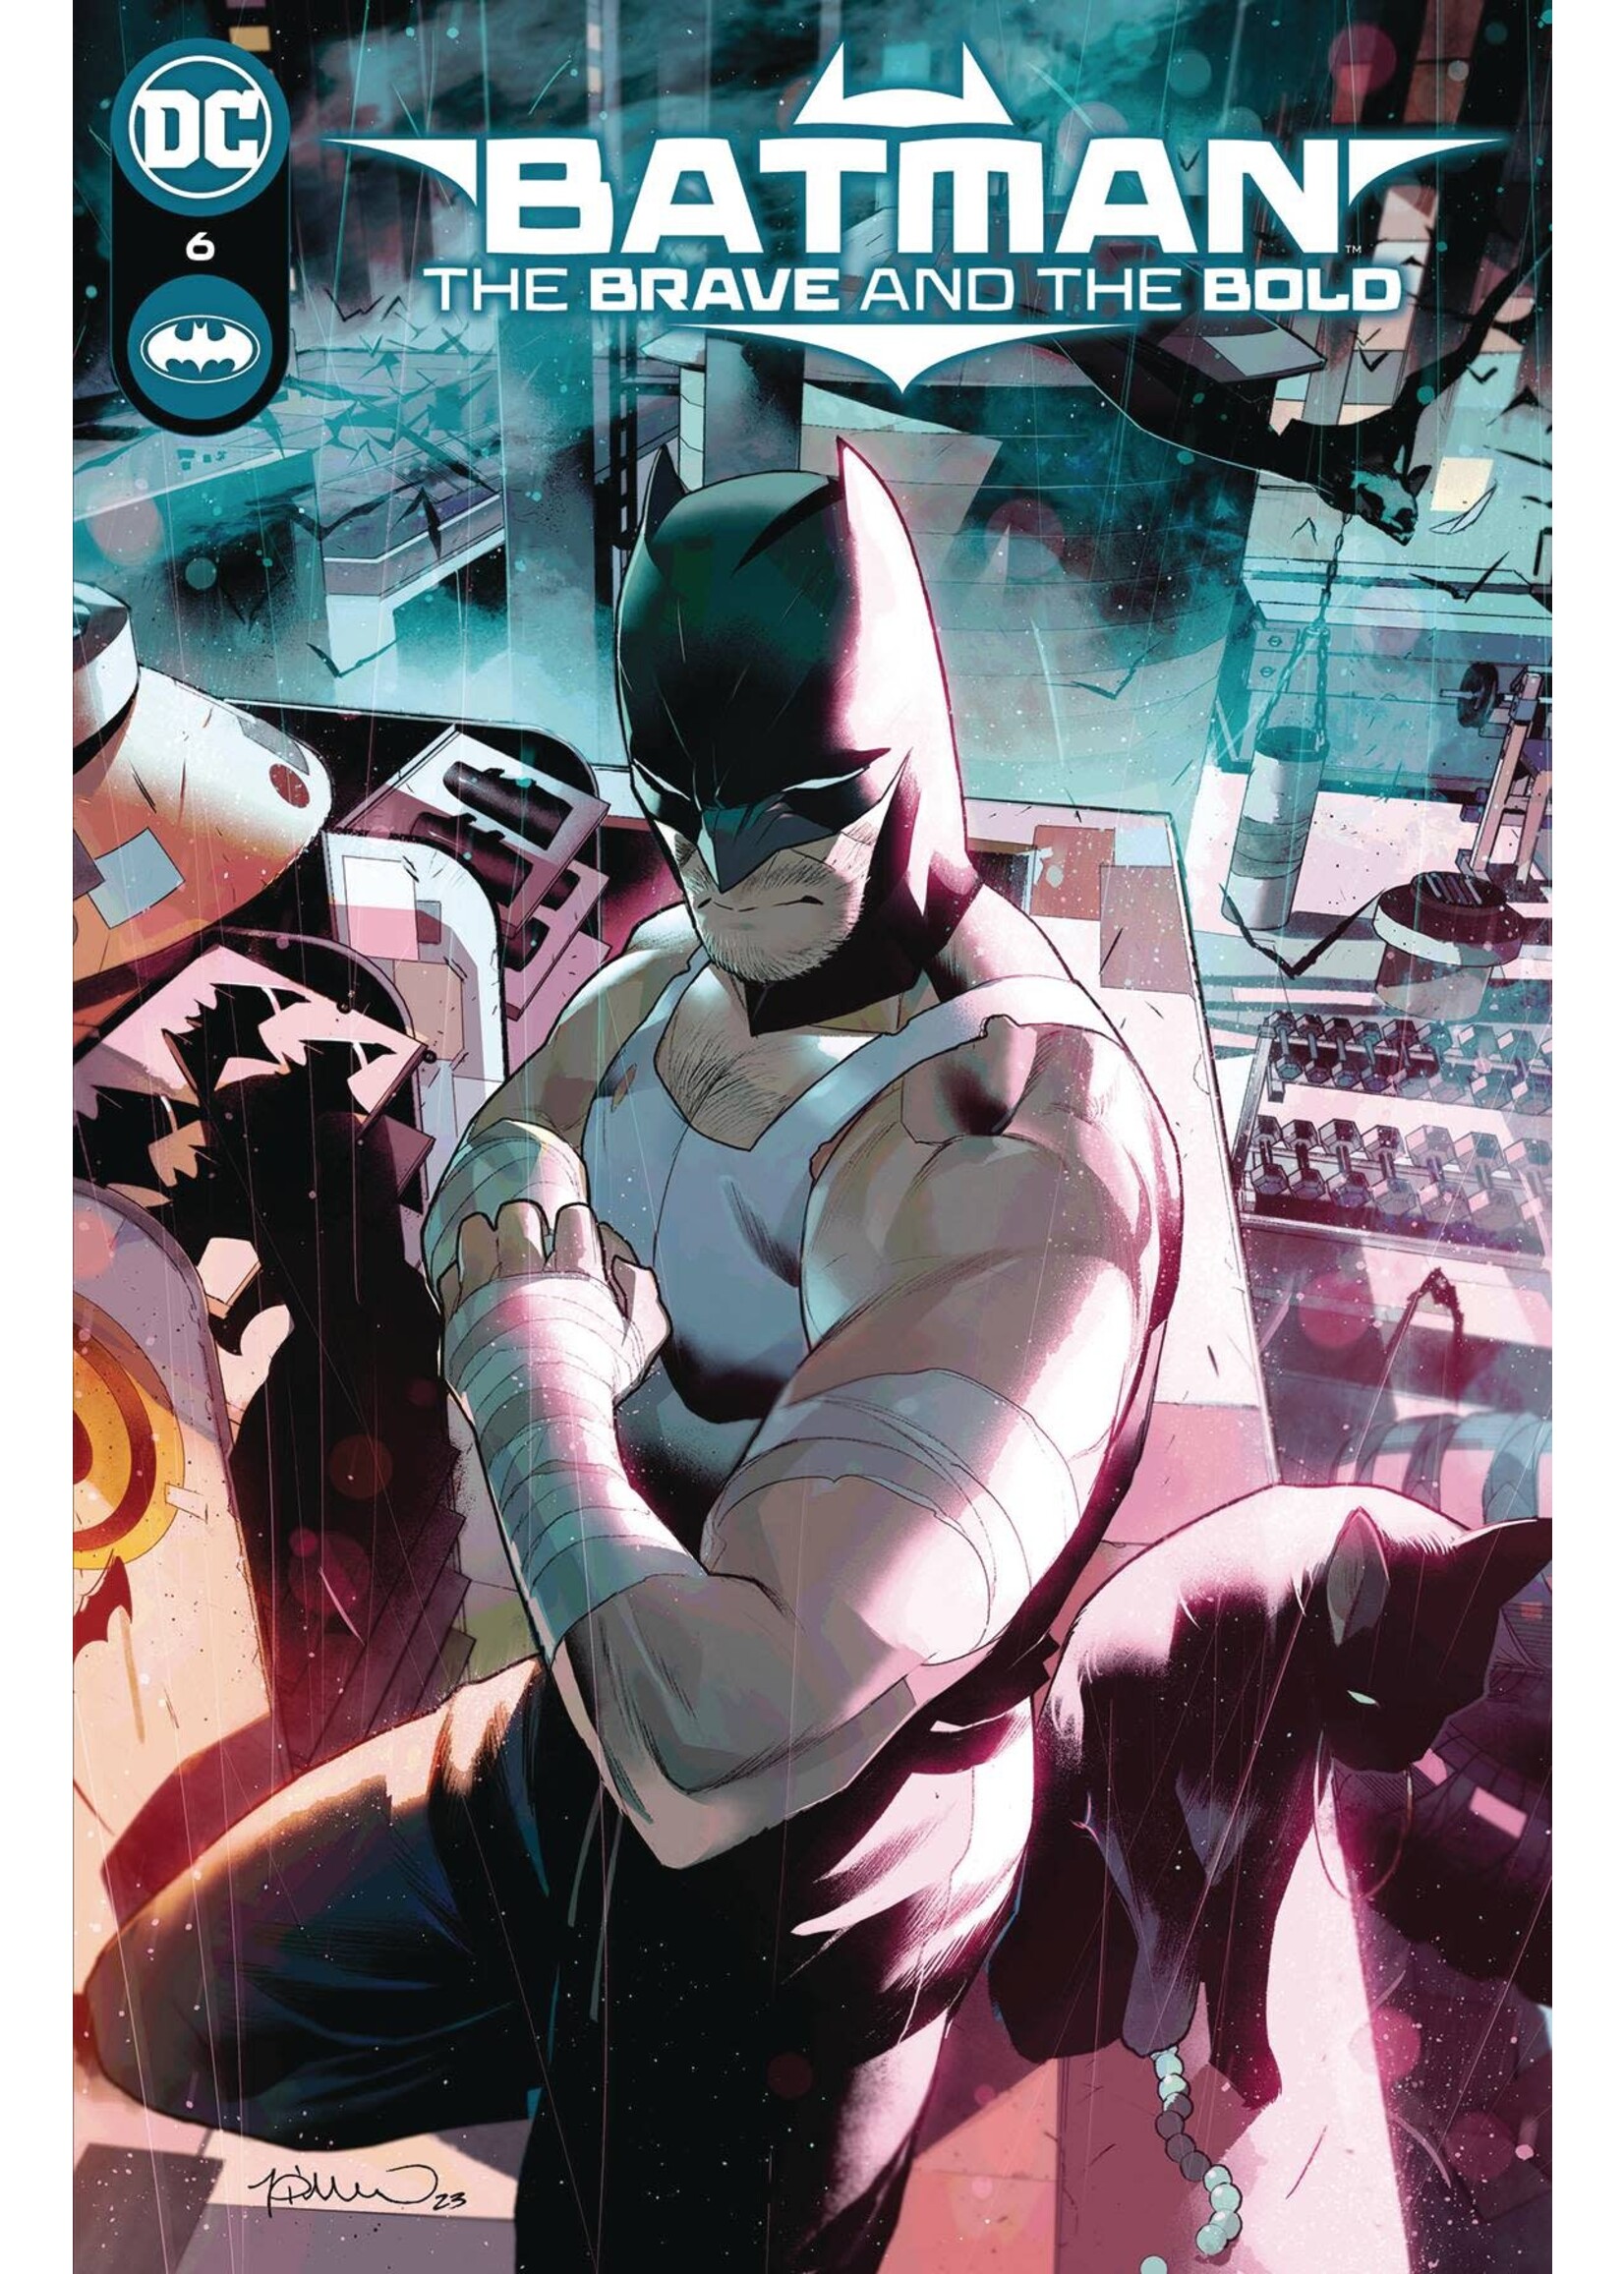 DC COMICS BATMAN THE BRAVE AND THE BOLD #6